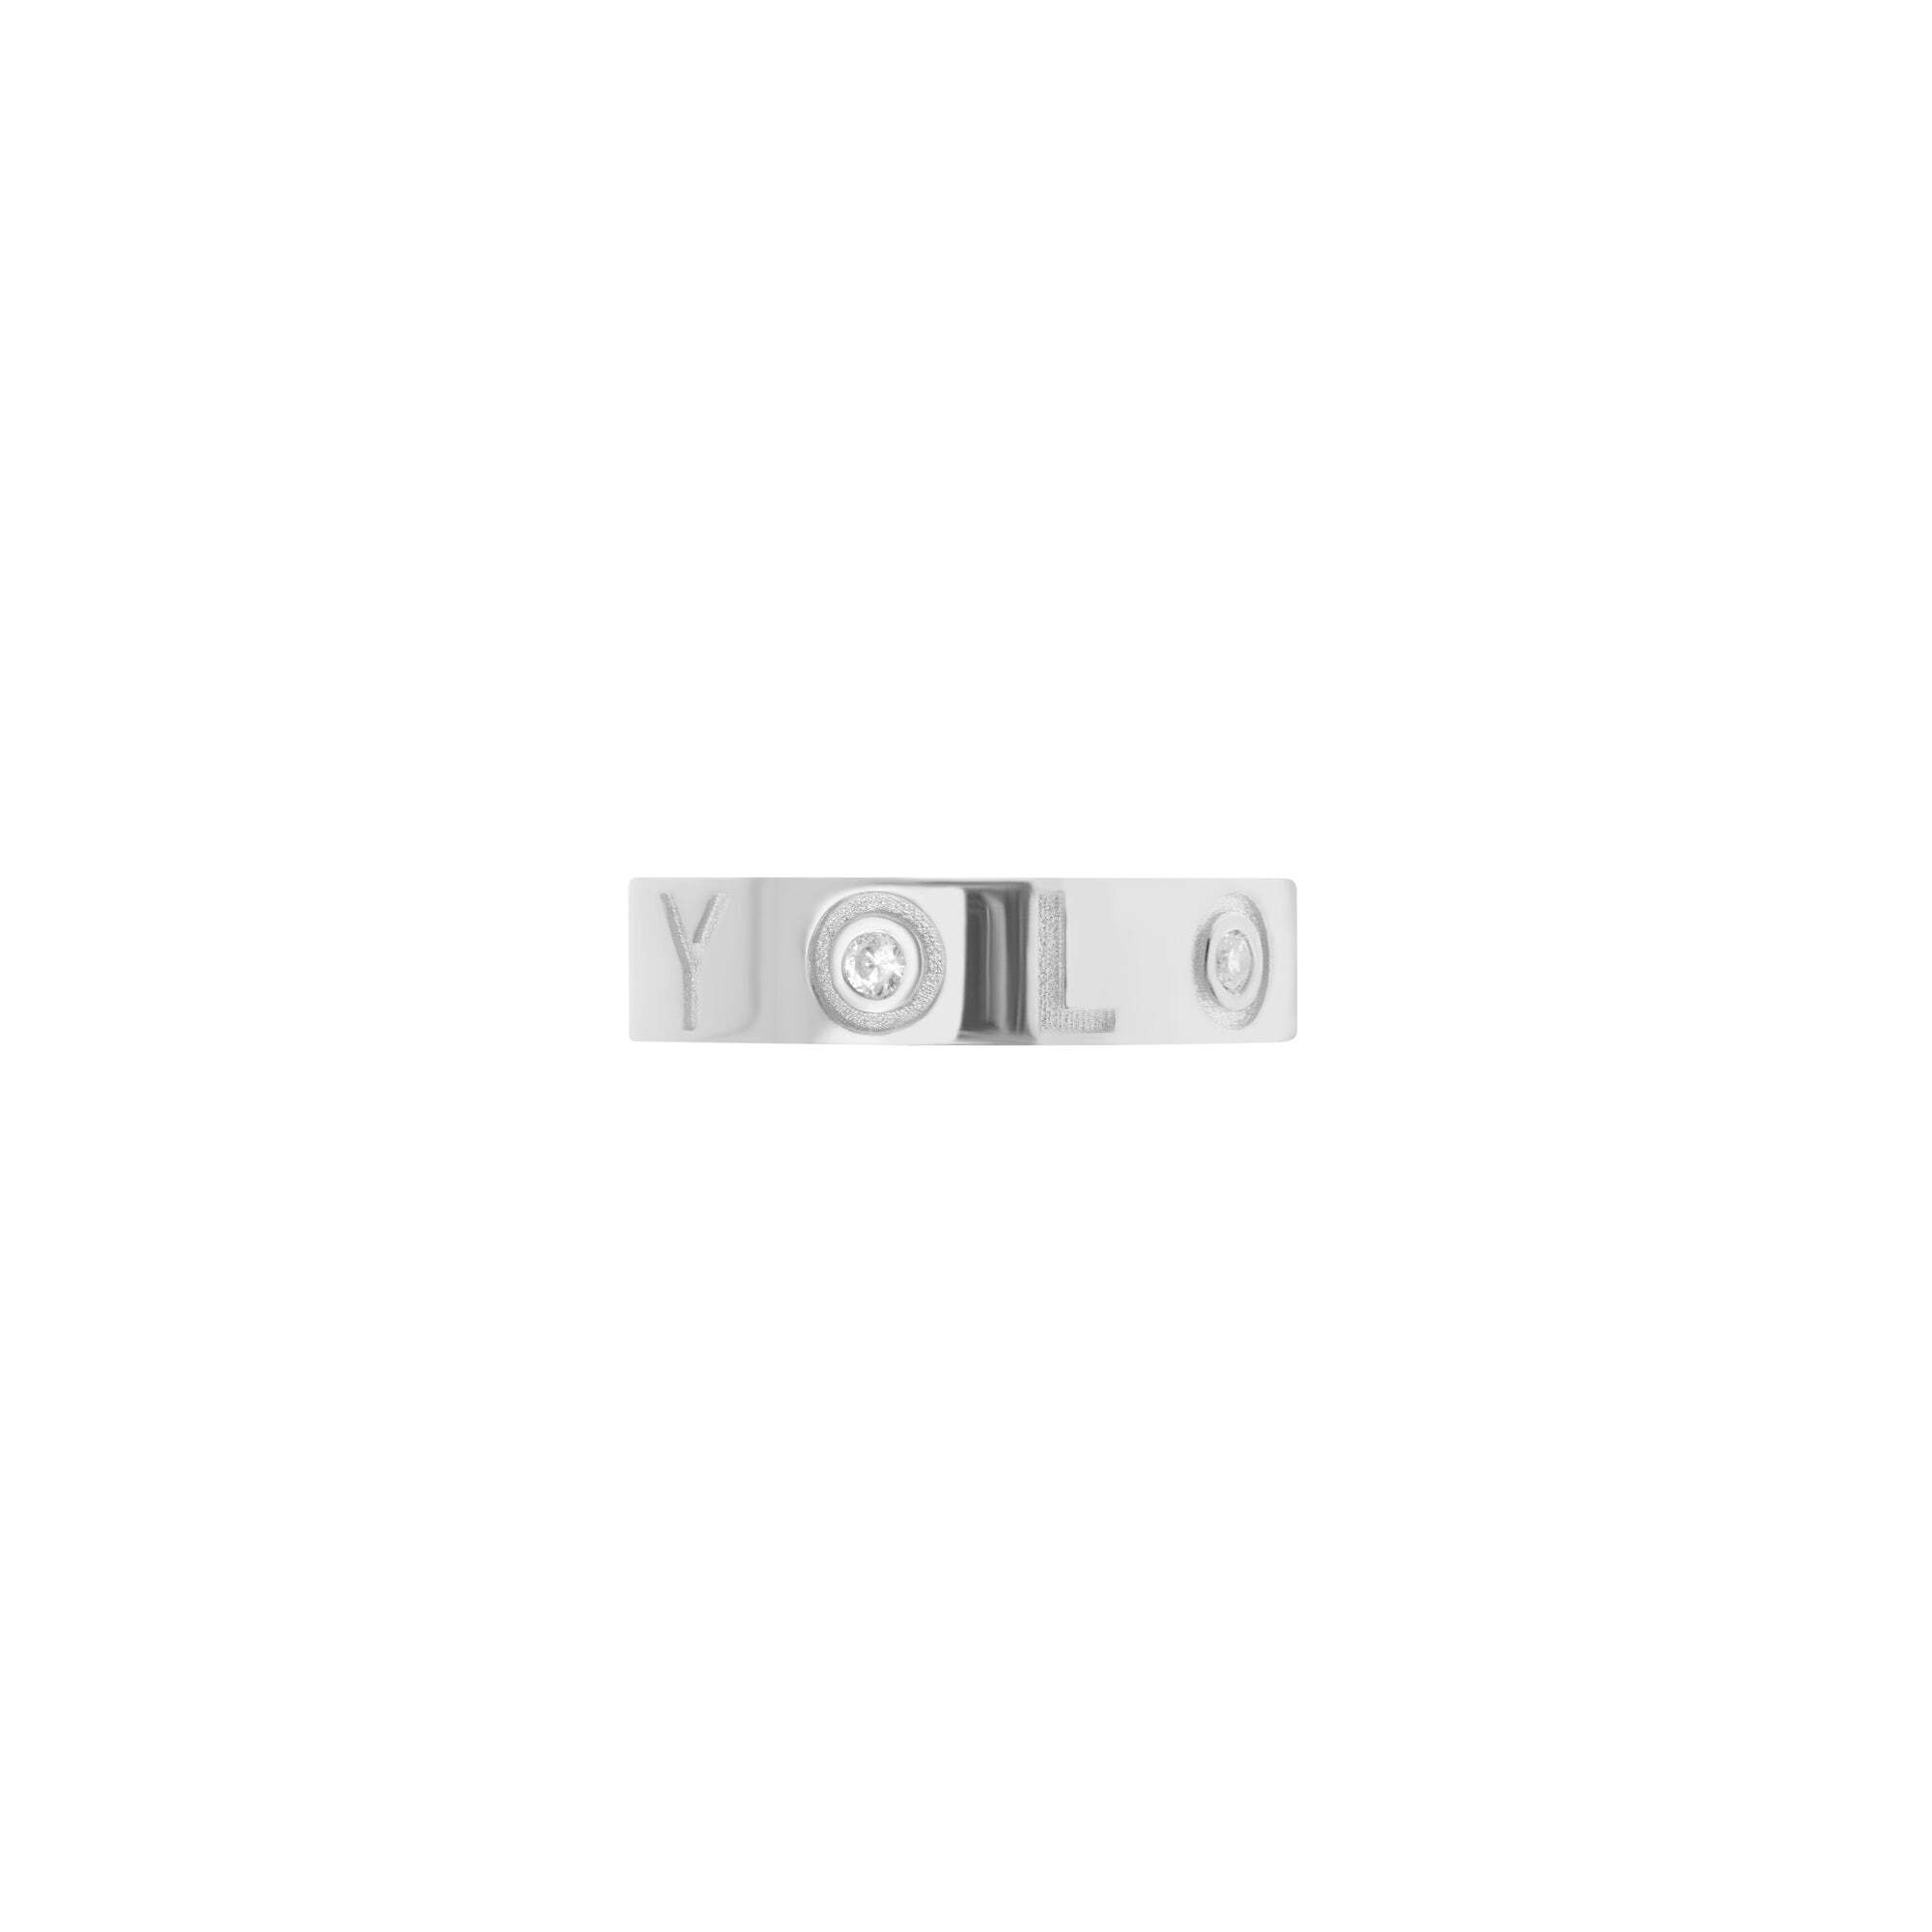 VIVA LA VIKA Кольцо Reminder Ring – YOLO Silver viva la vika кольцо reminder ring – yolo silver